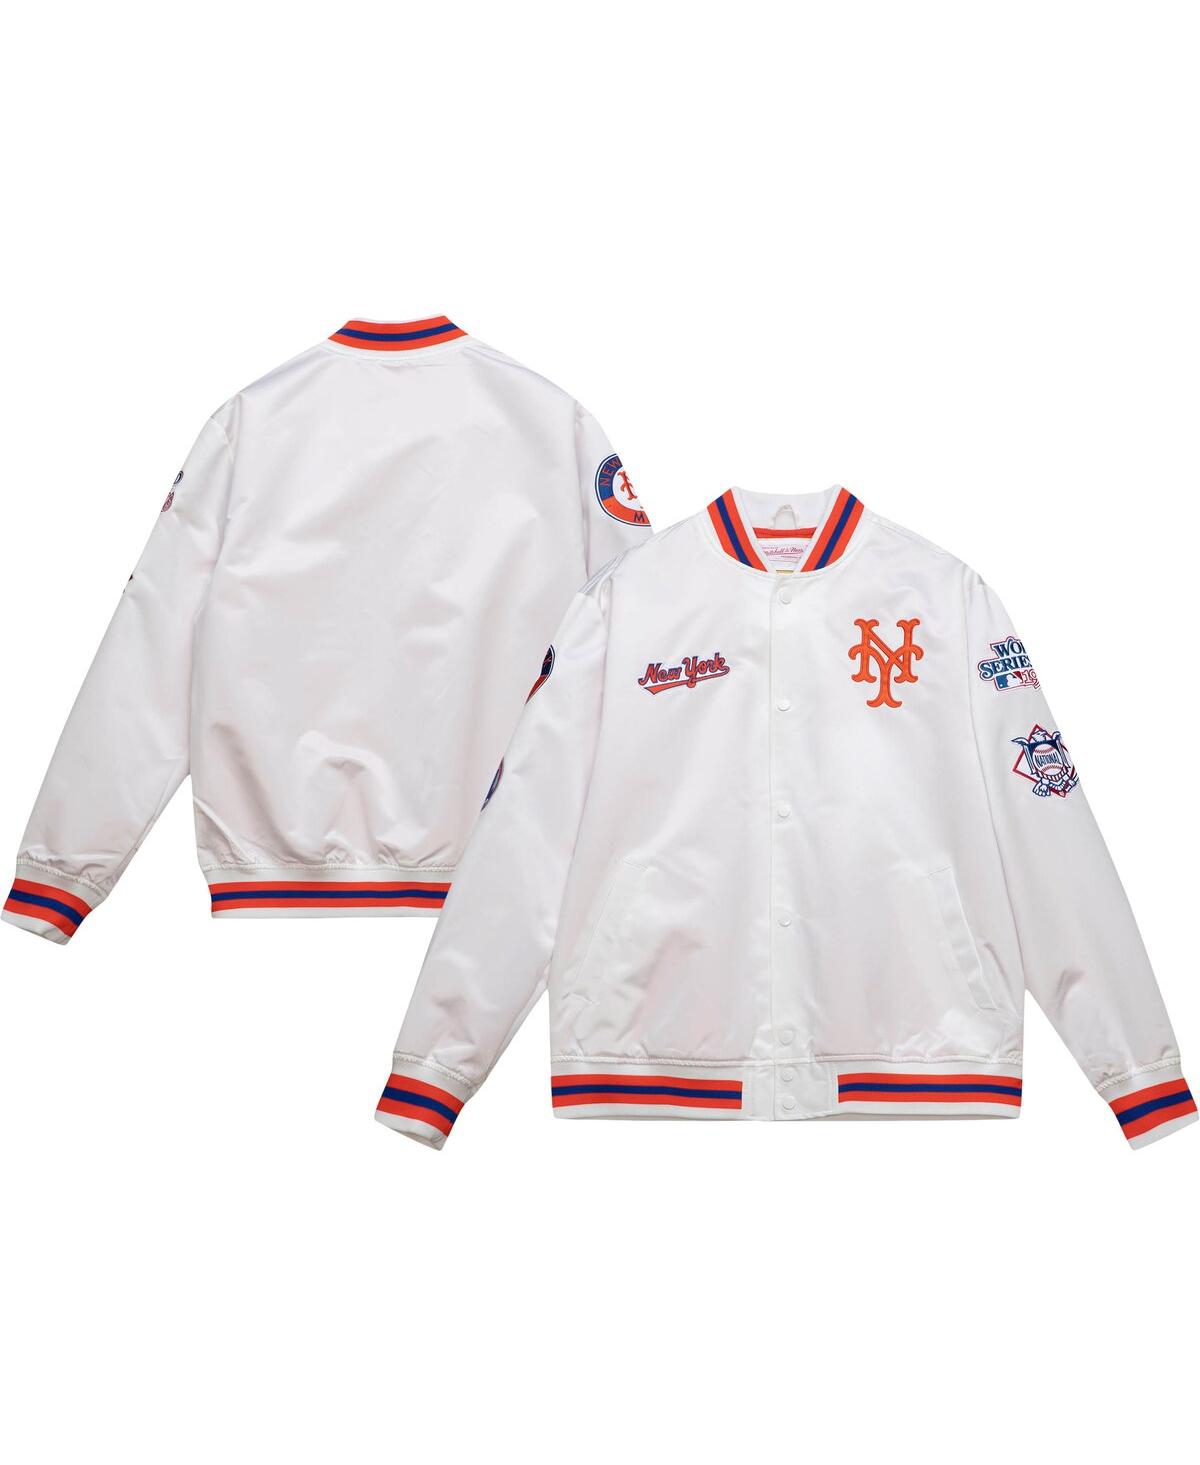 Shop Mitchell & Ness Men's  White New York Mets City Collection Satin Full-snap Varsity Jacket